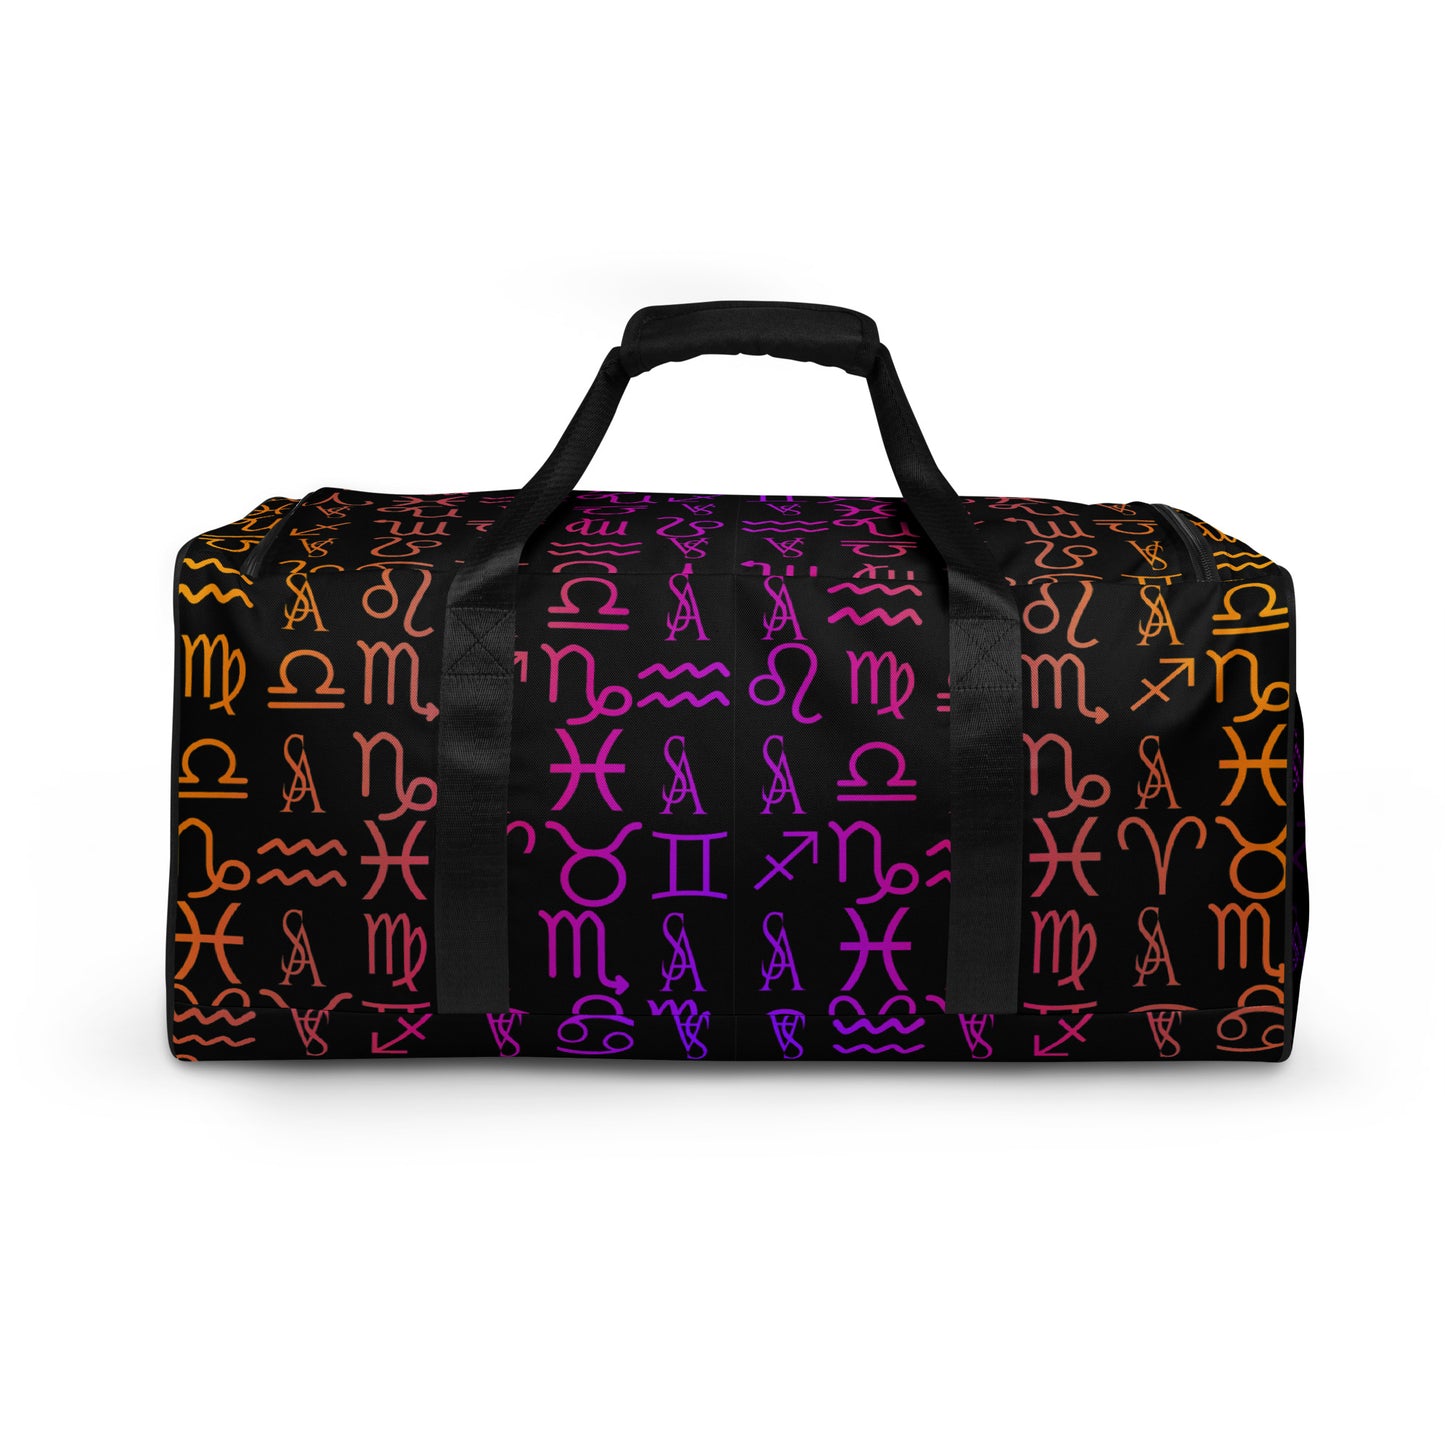 Zodiac Print Duffle Bag By Iamstephenallen